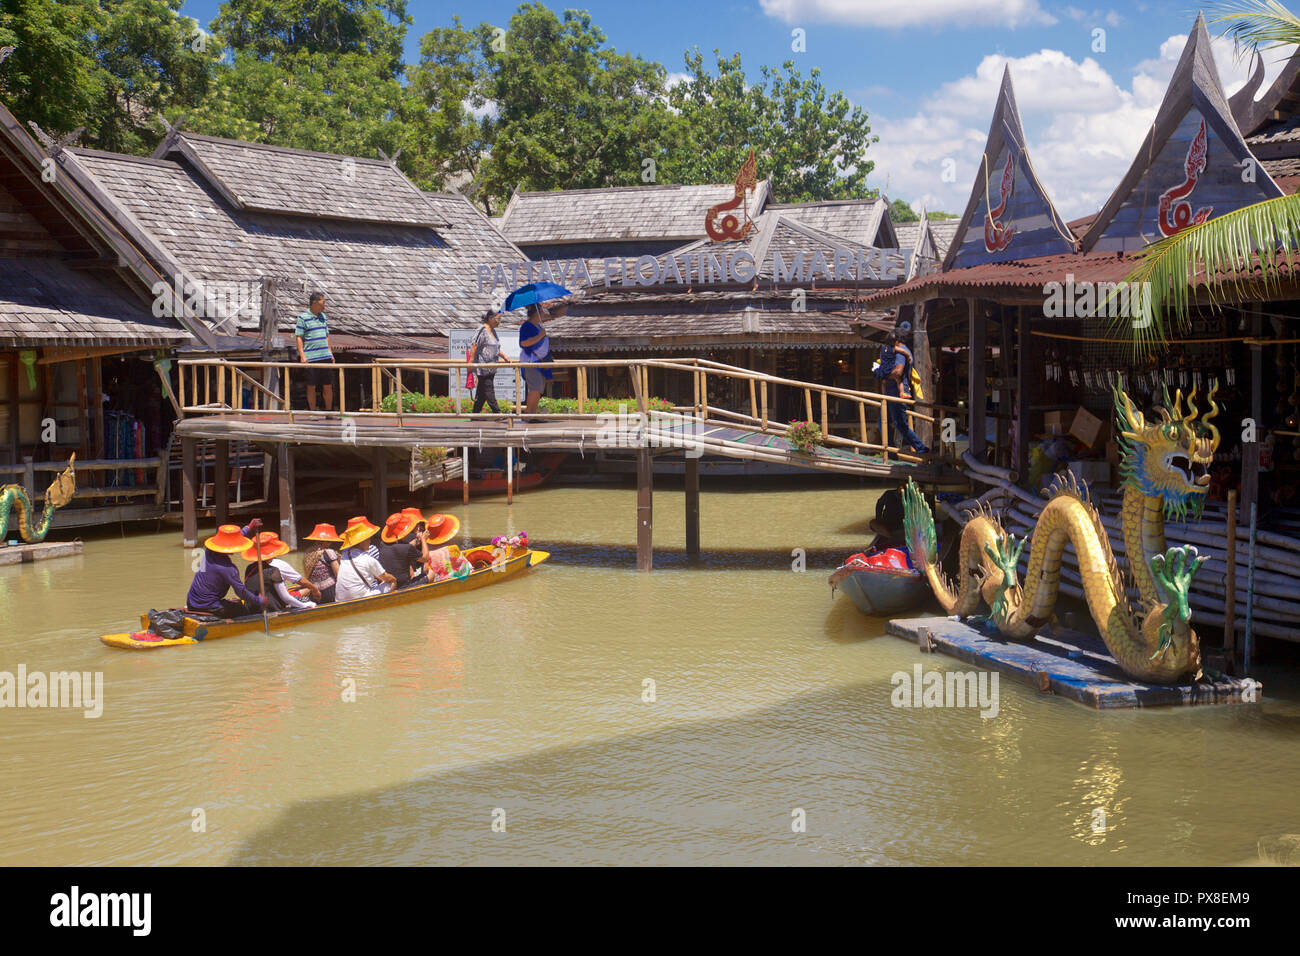 Pattaya floating market, Thailand Stock Photo: 222692633 - Alamy